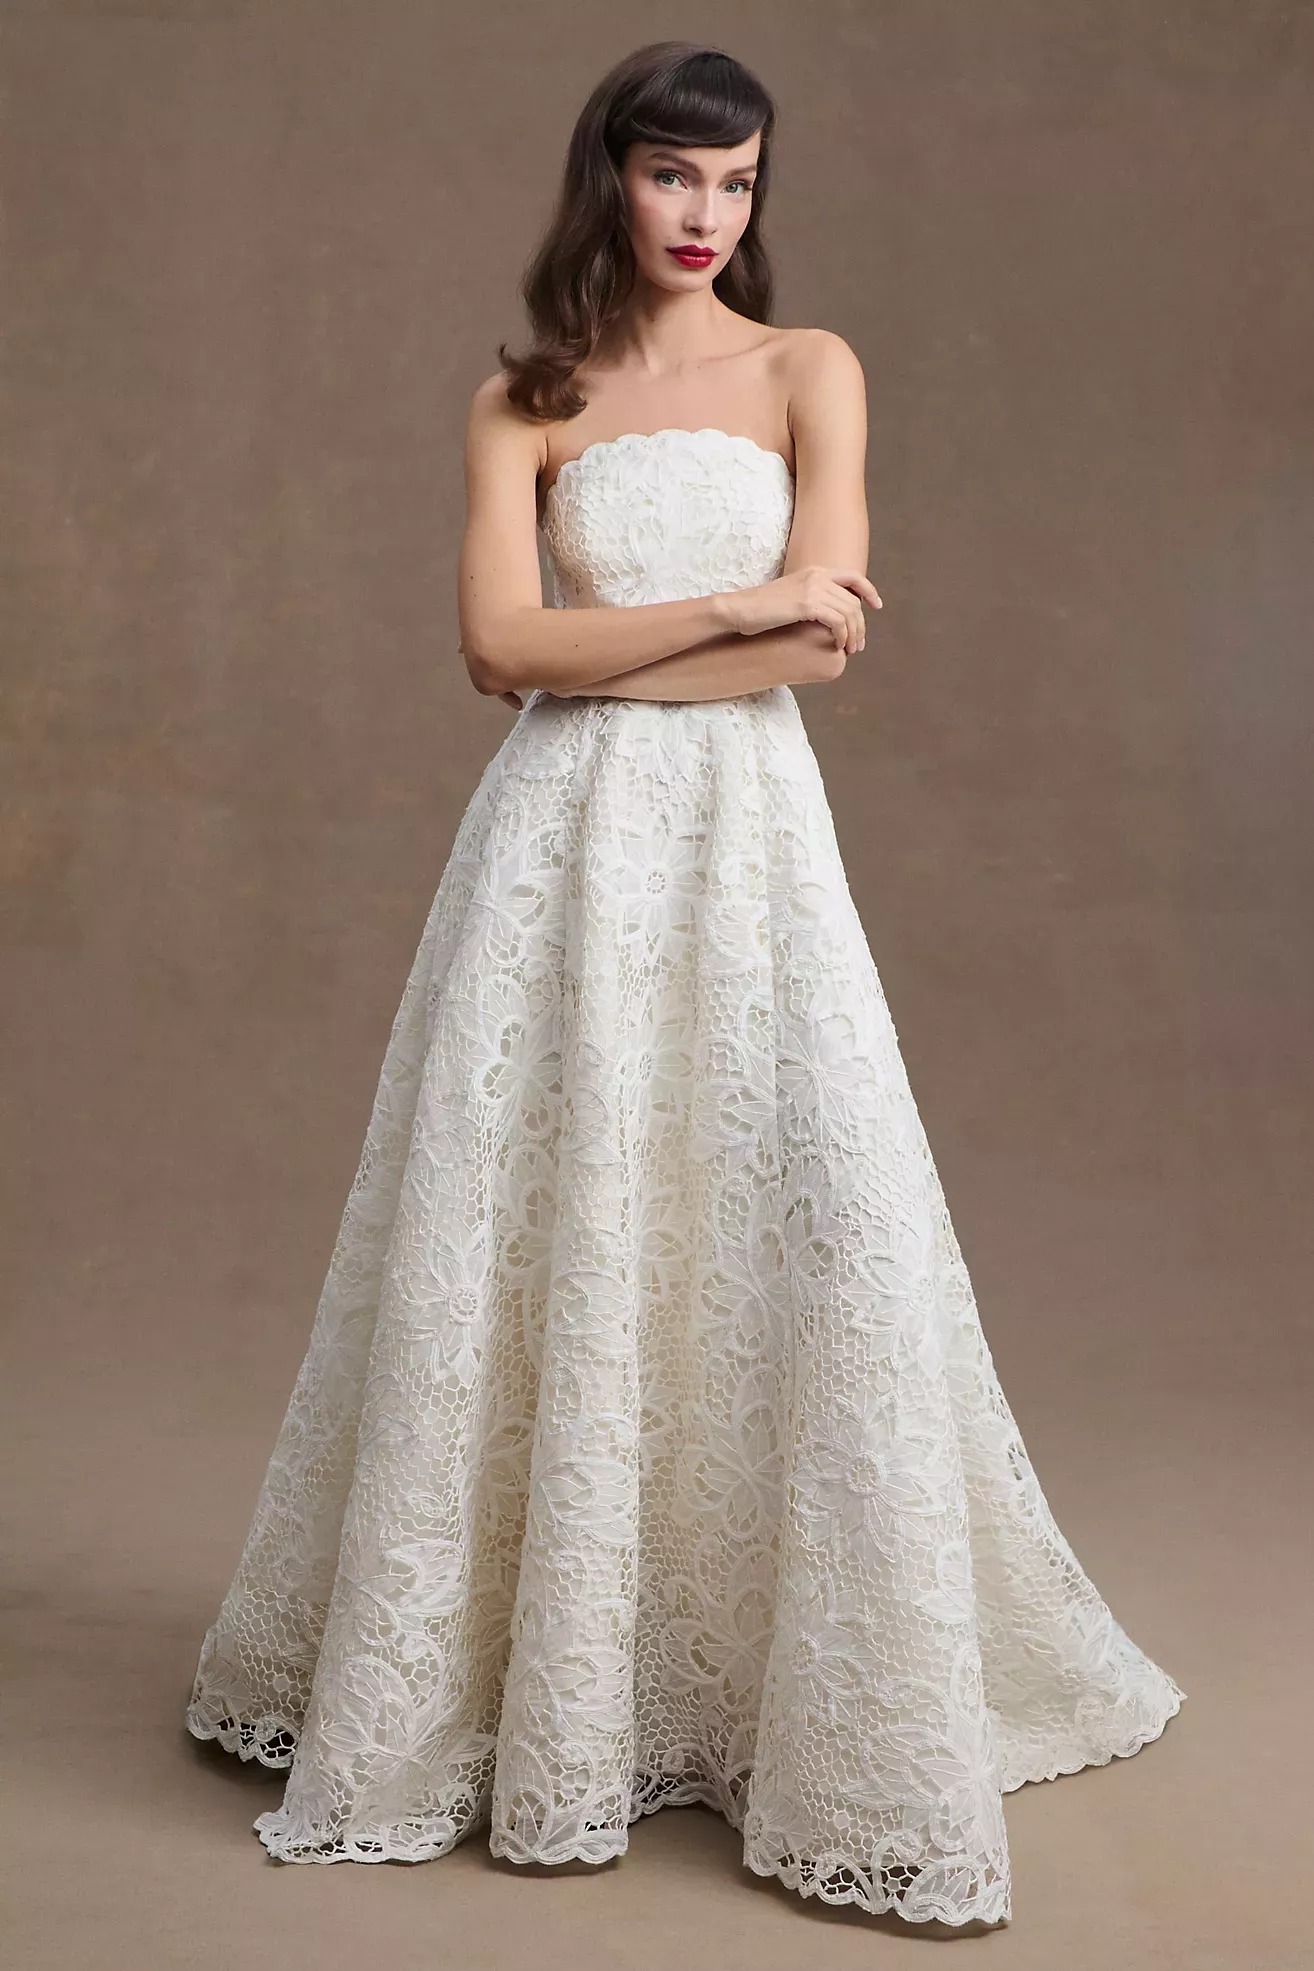 Savannah Miller Jacquetta Wedding Dress Save 20% - Stillwhite